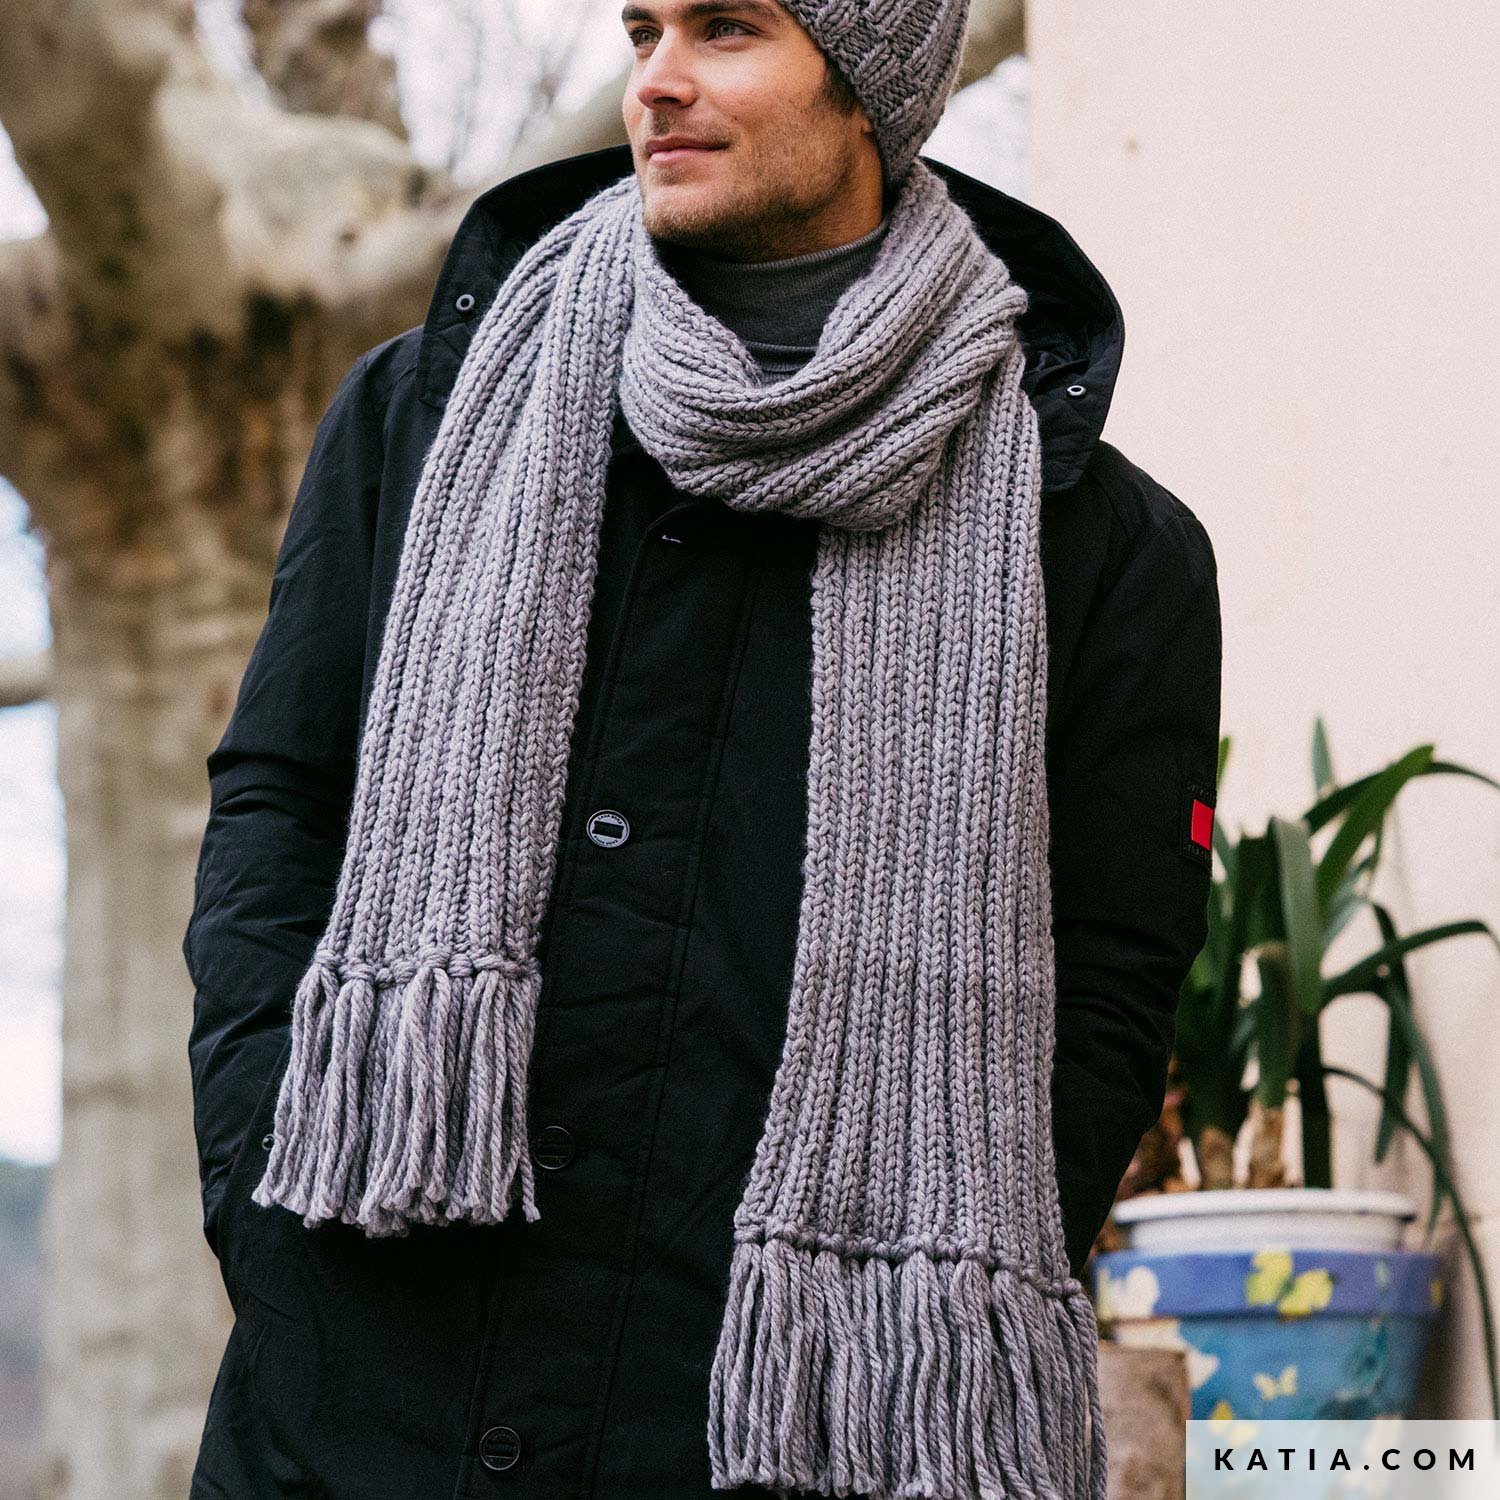 https://www.katia.com/files/mod/6141/patron-tricoter-tricot-crochet-homme-echarpe-automne-hiver-katia-6141-7-g.jpg